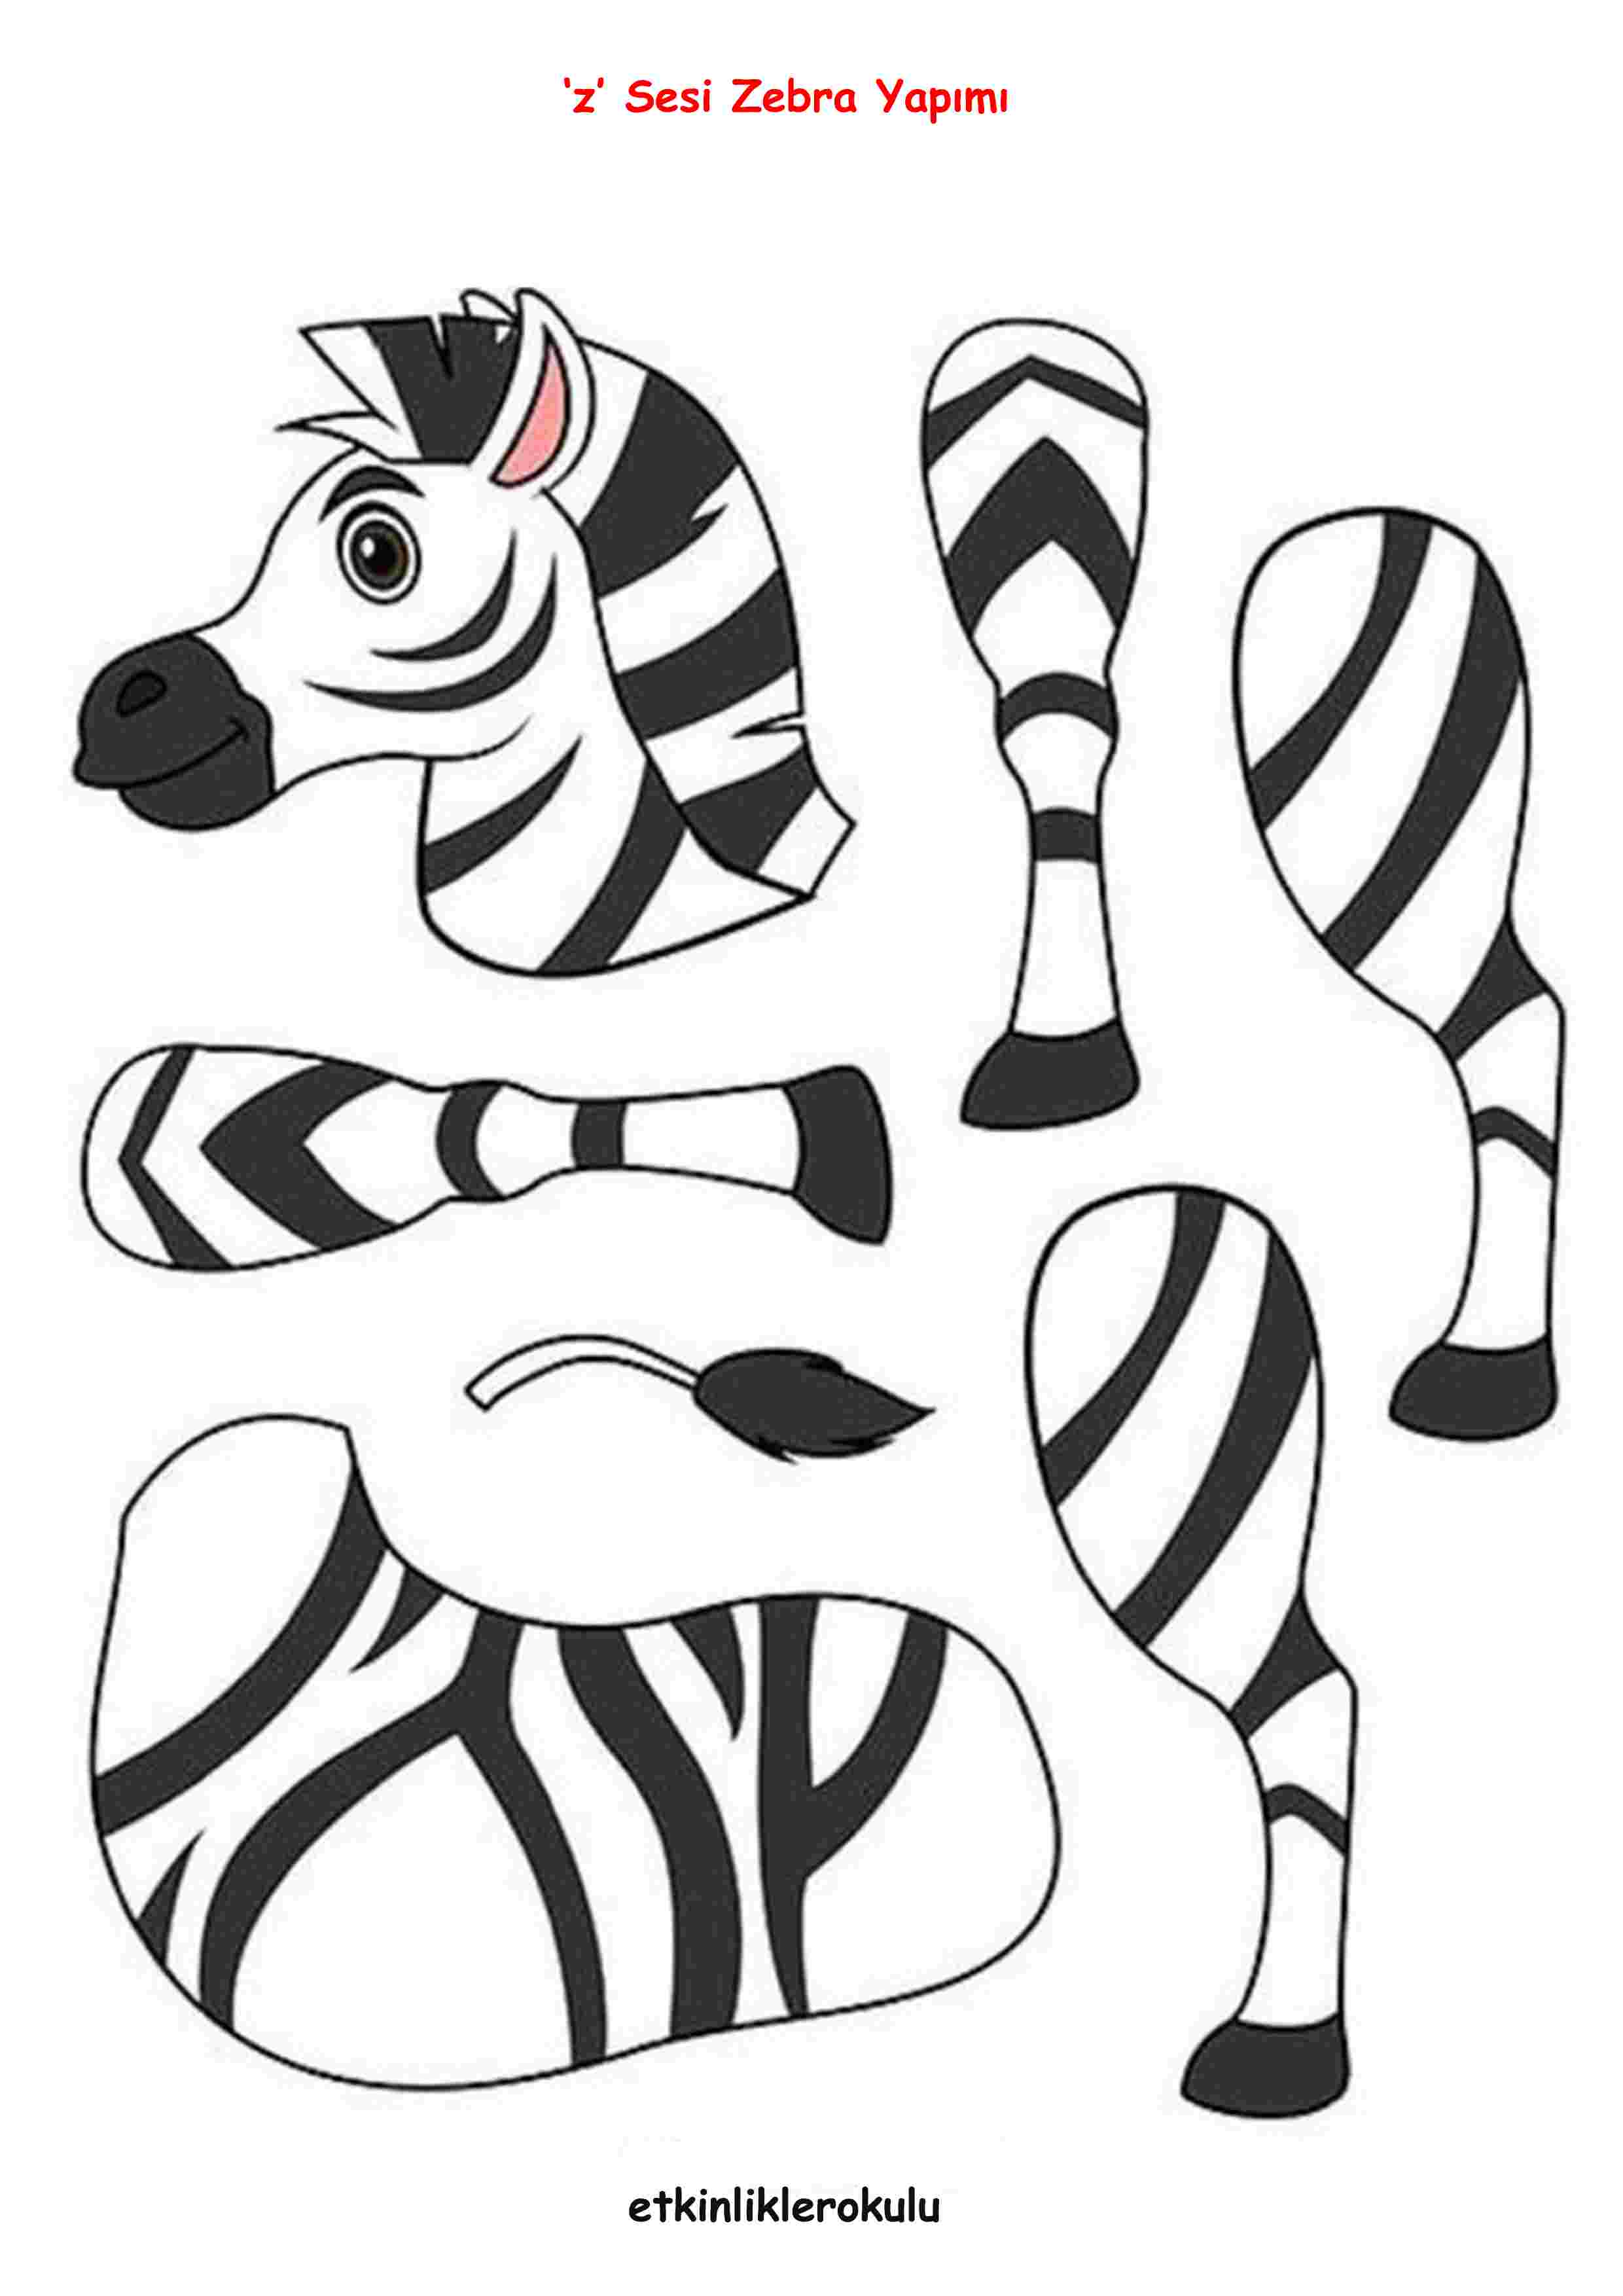 z Sesi Zebra Yapımı